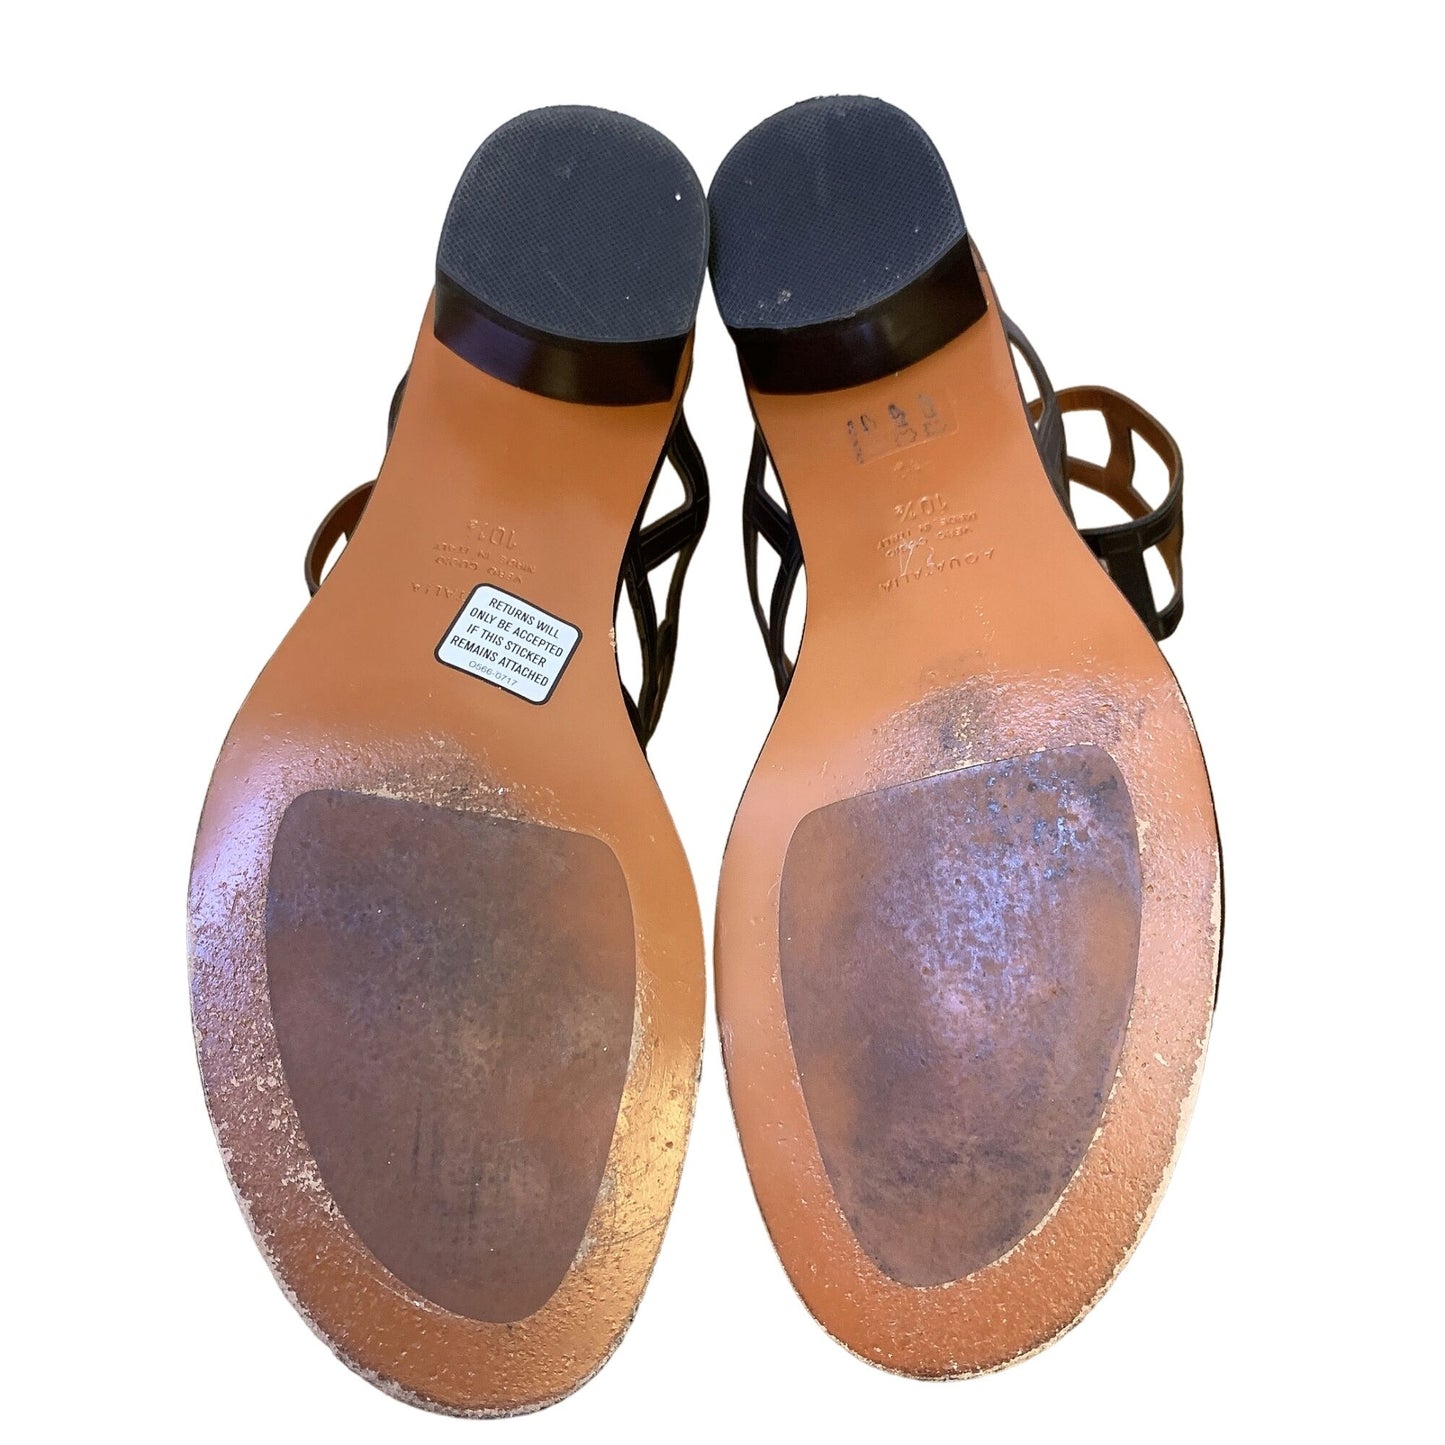 *Aquatalia Black & Brown Leather Sandals Size 10.5